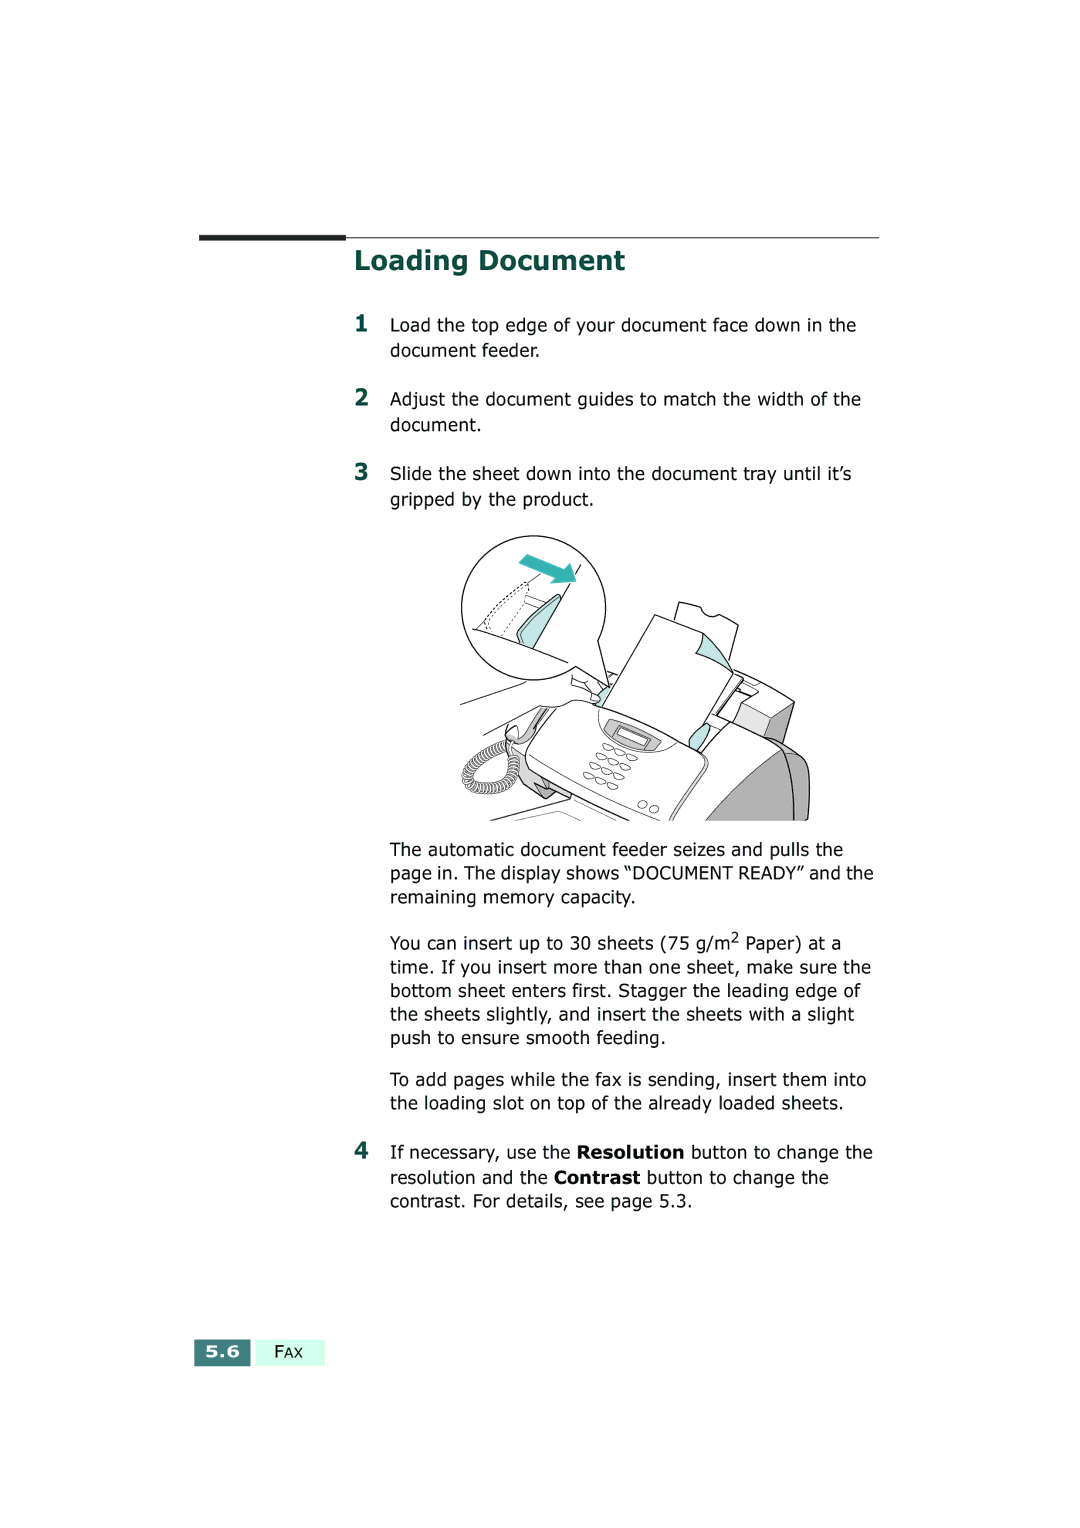 Samsung SF-430 manual Loading Document 